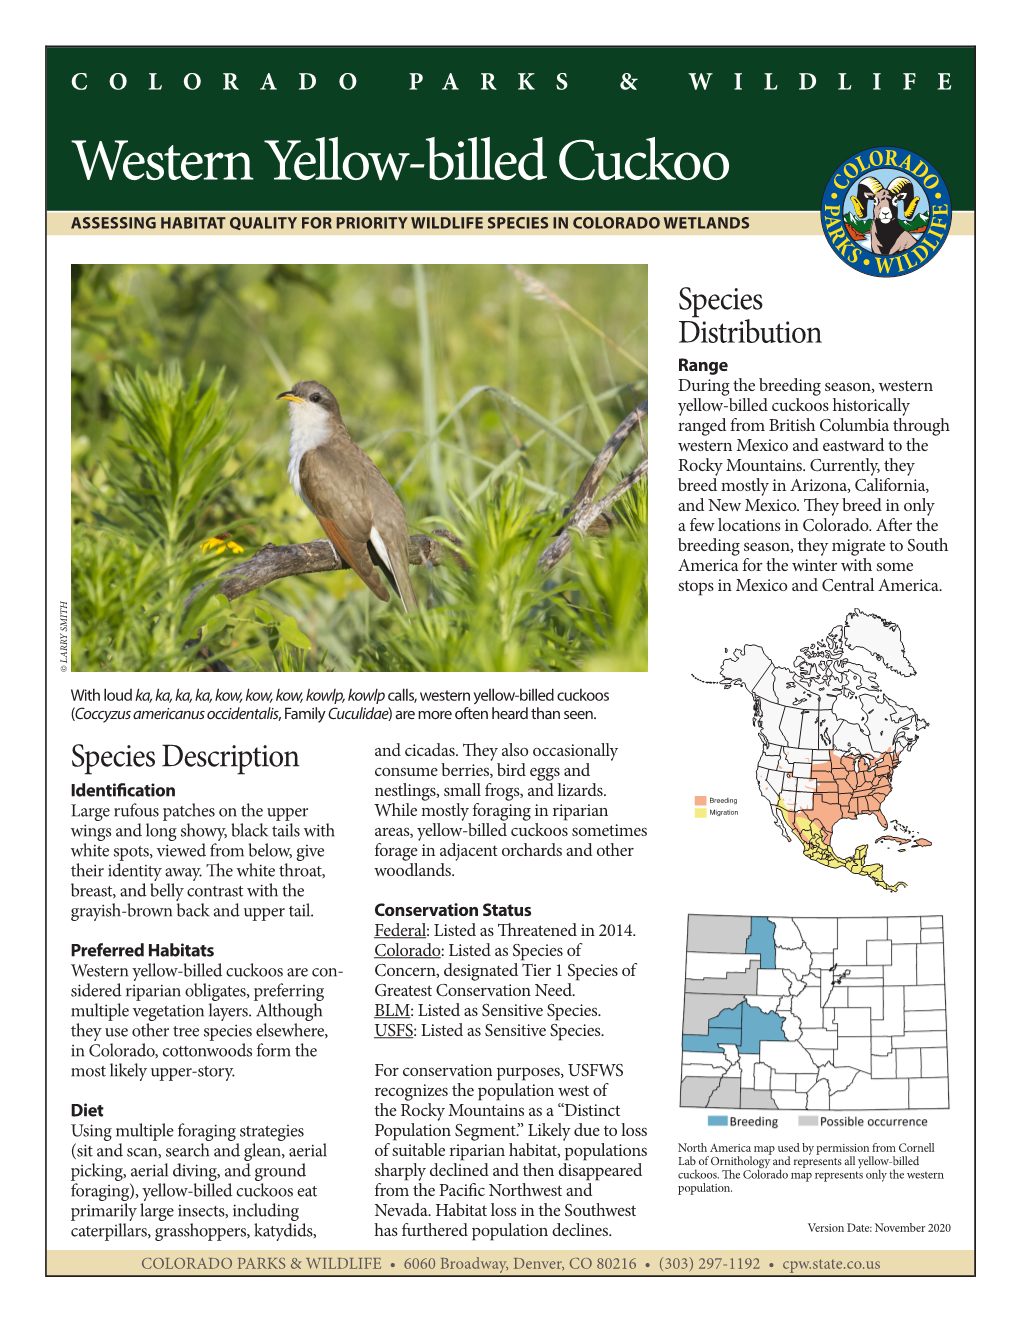 Western Yellow-Billed Cuckoo Habitat Scorecard